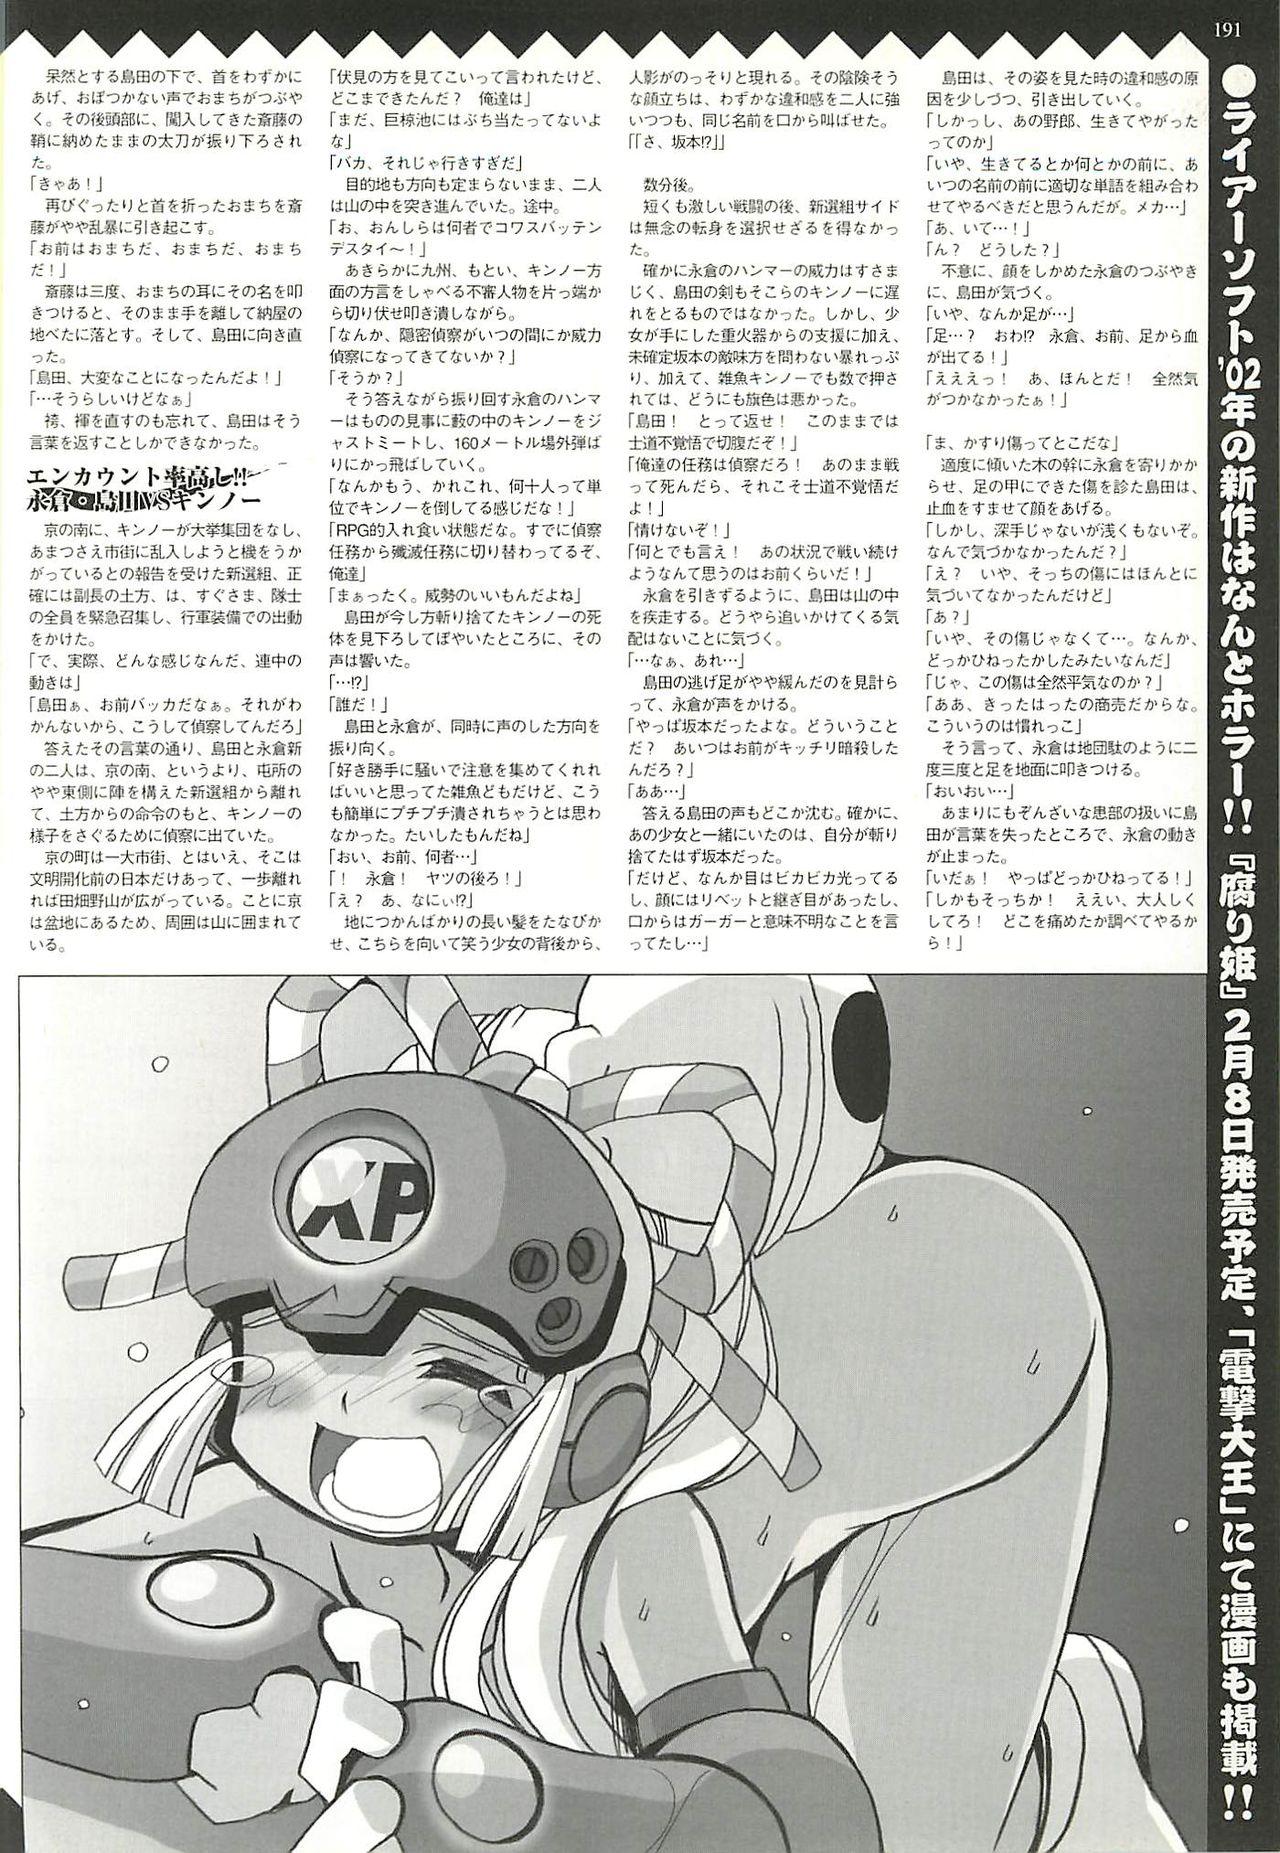 BugBug 2002年1月号